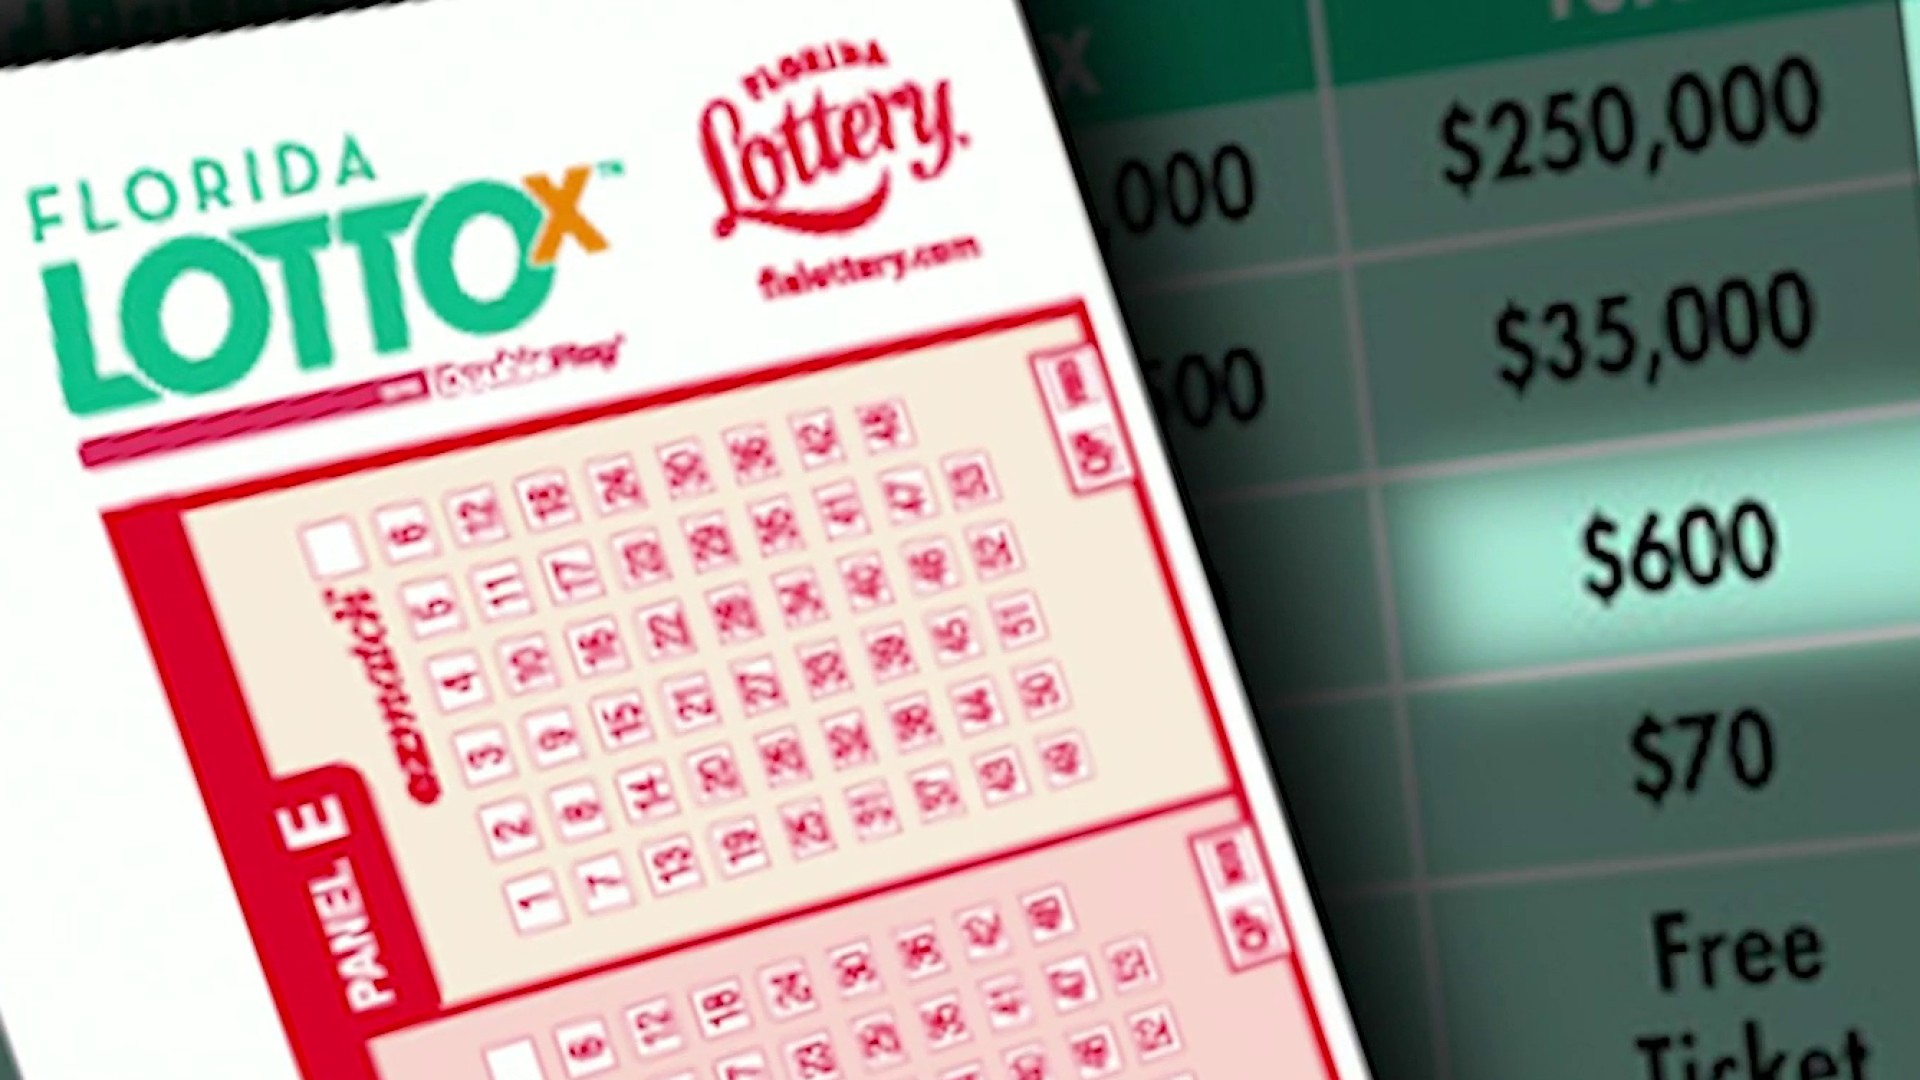 Seminole County man wins $2 million Florida Lottery jackpot prize